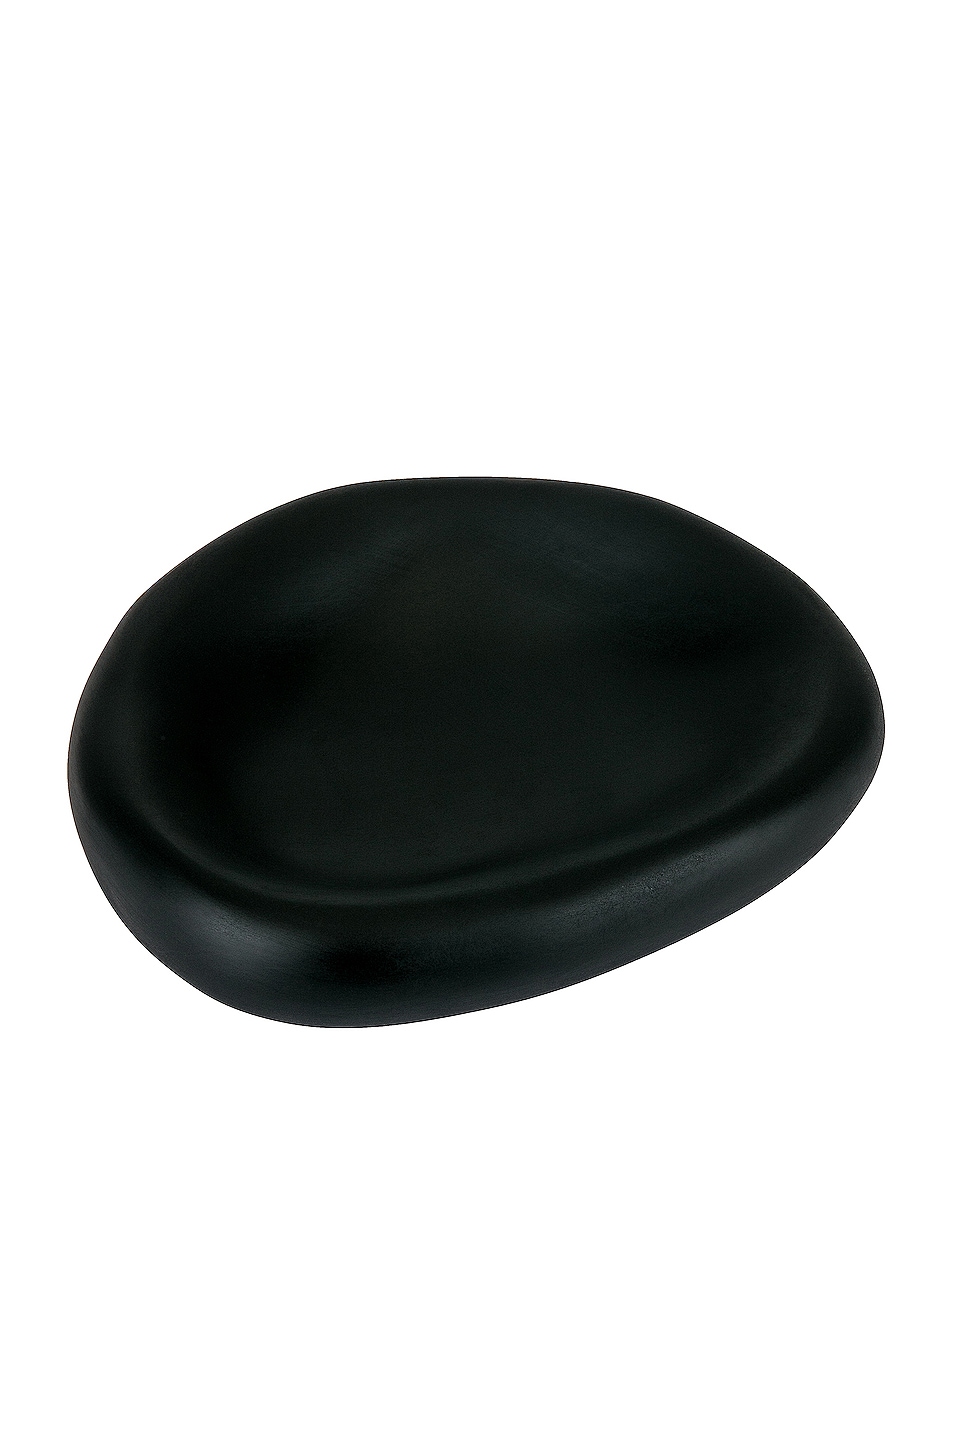 Image 1 of Tina Frey Designs Medium Amoeba Bowl in Black